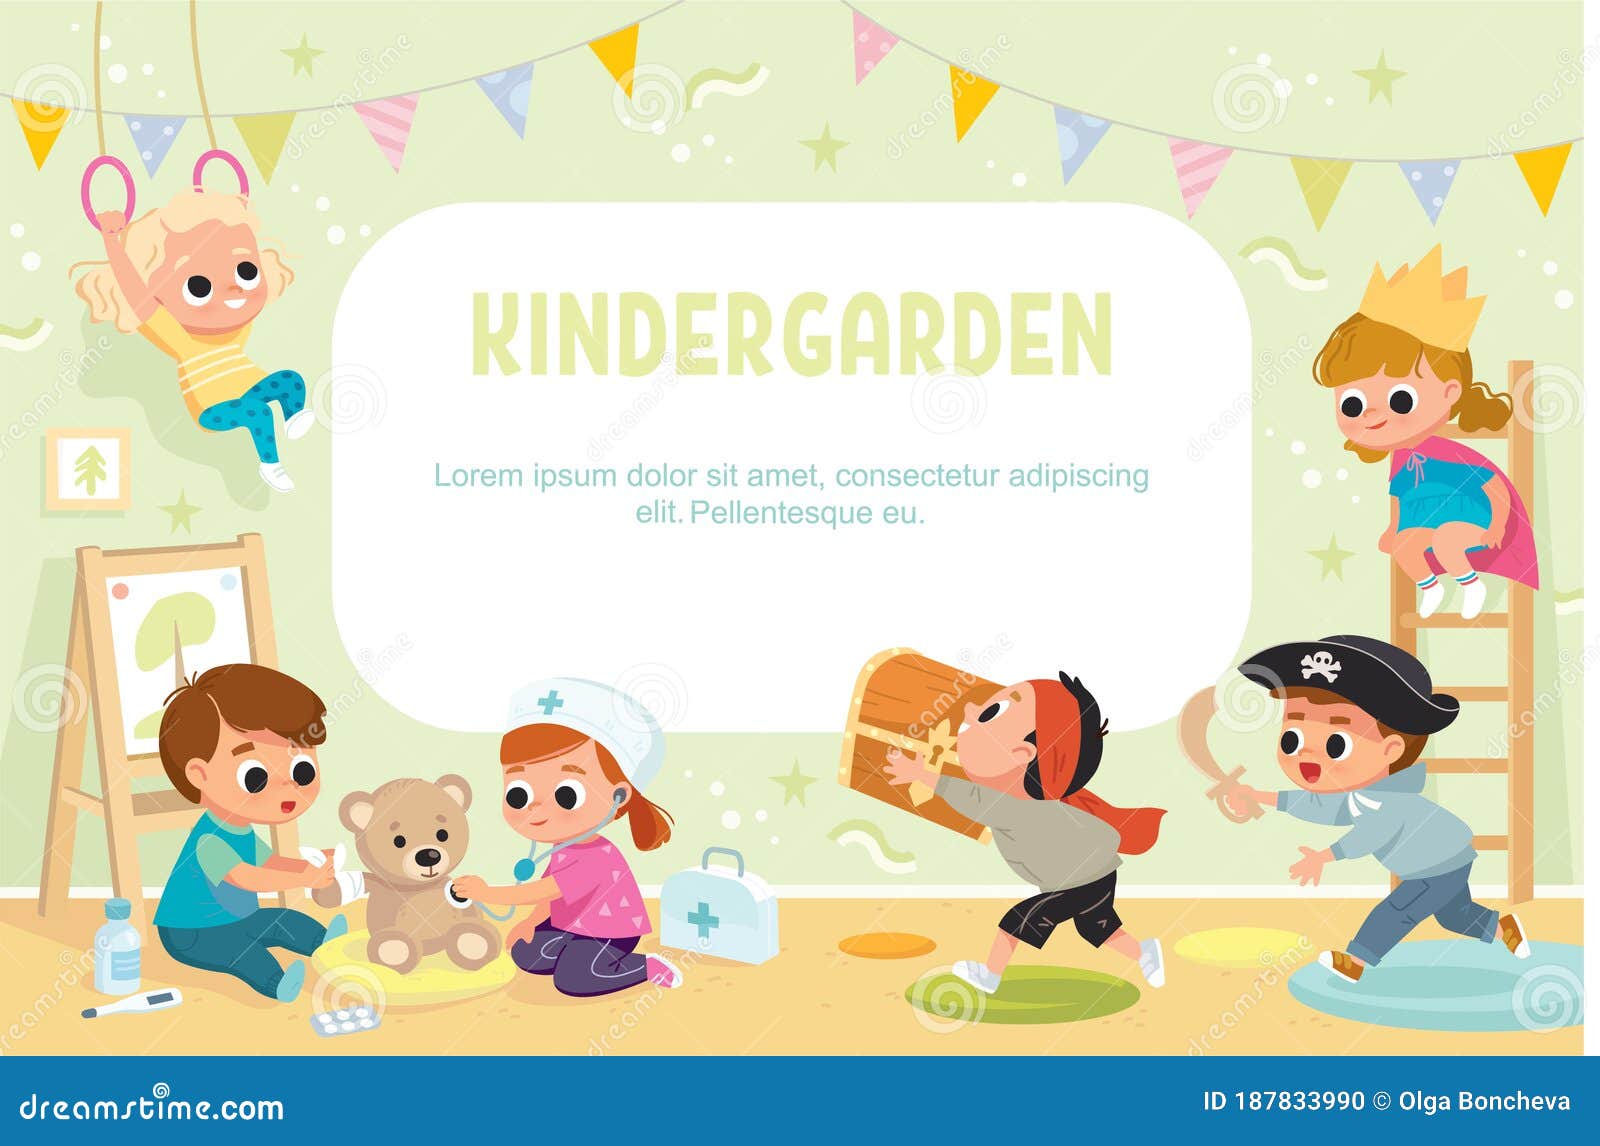 children play in kinder garden. preschool kids have fun.